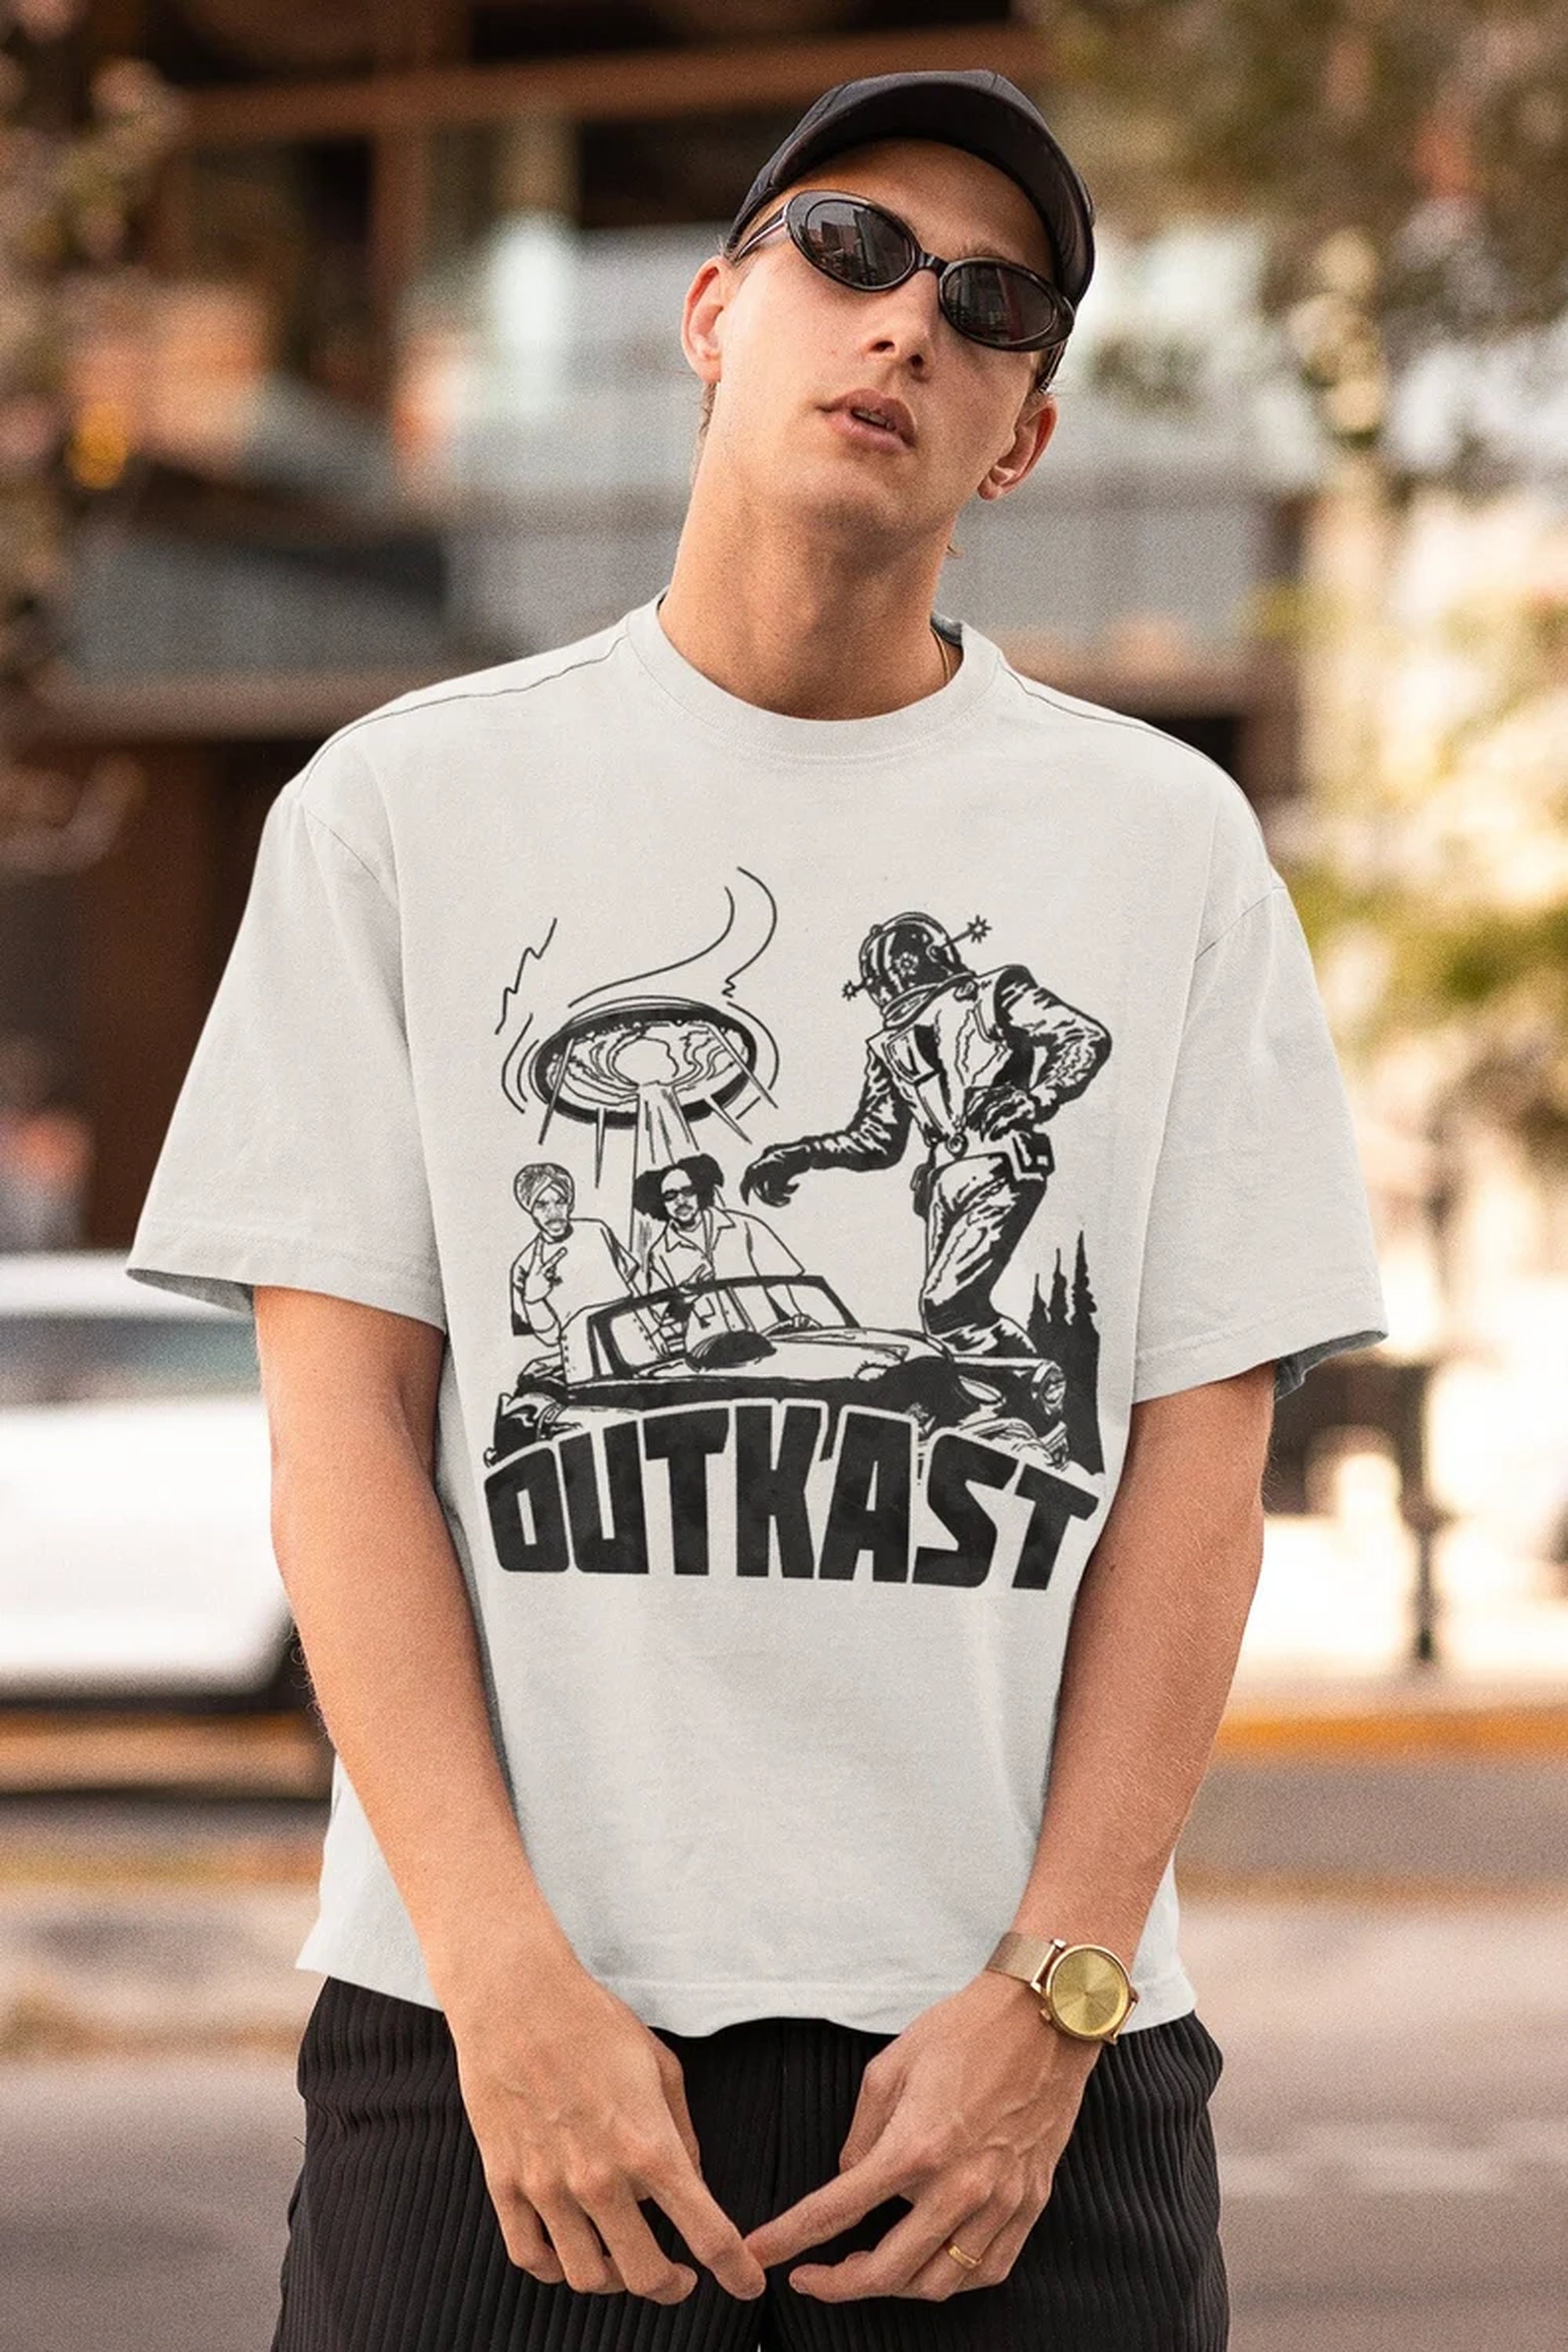 Skull Basketball Graphic T Shirt Men Hip Hop Washed T Shirt 100